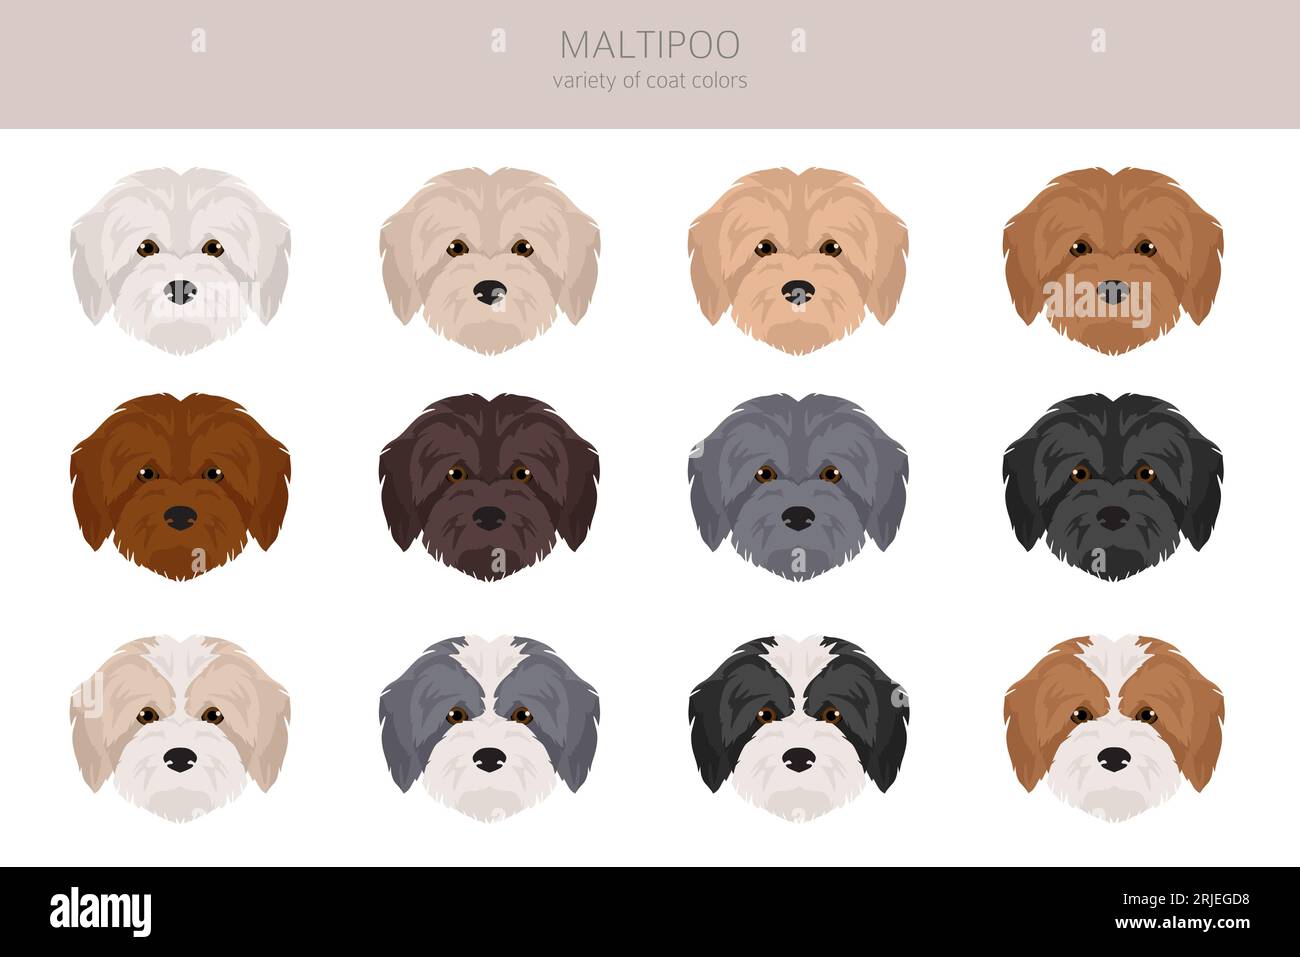 Maltipoo clipart. Maltese Poodle mix. Different coat colors set.  Vector illustration Stock Vector